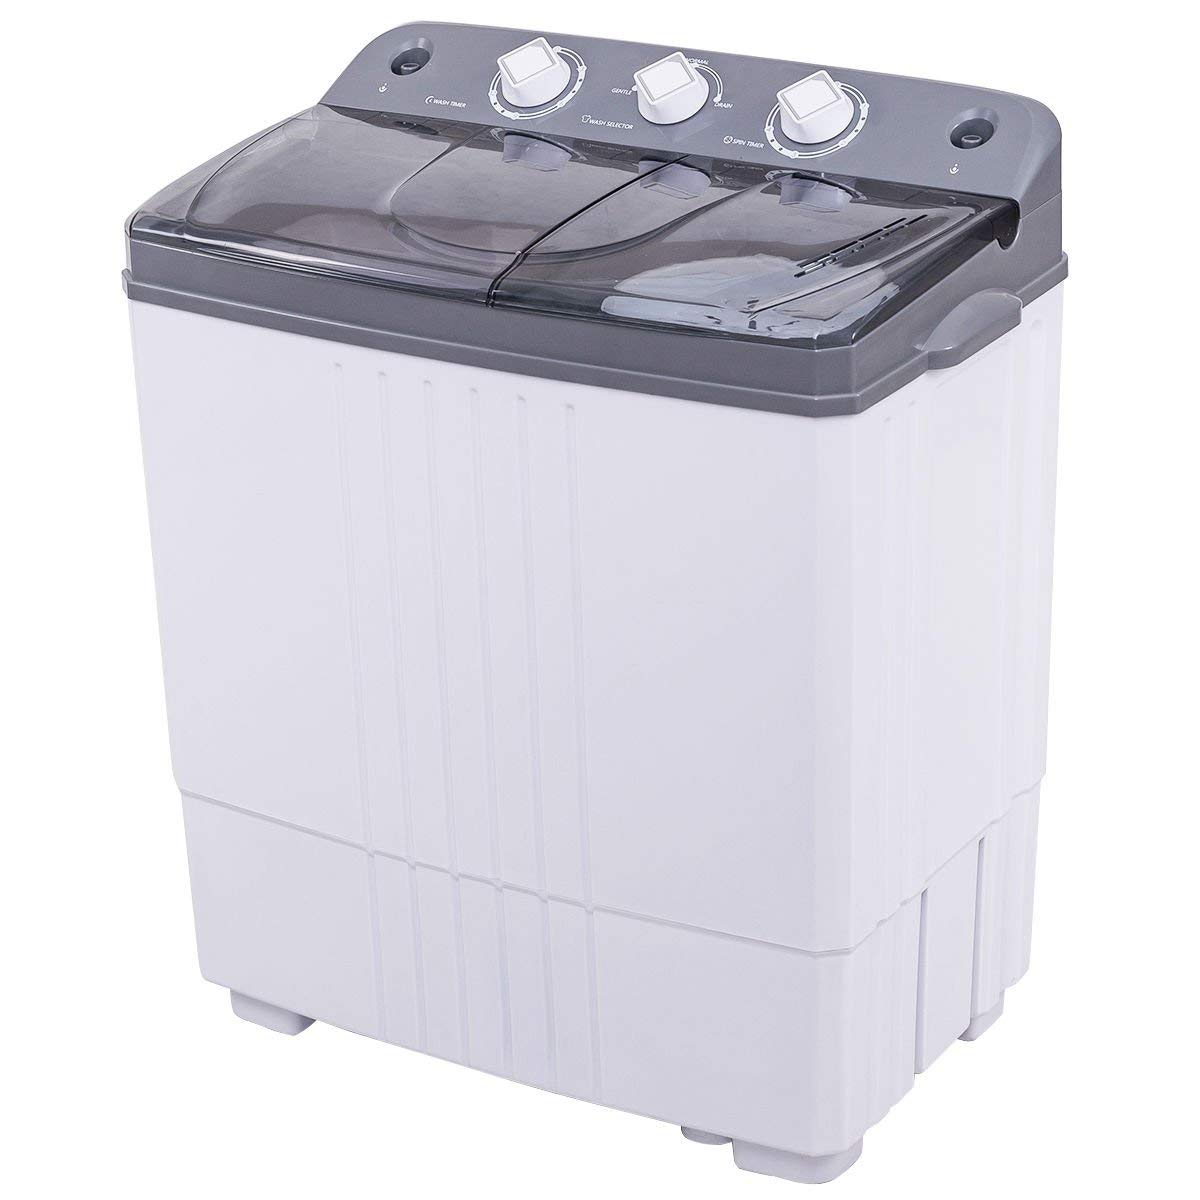 COSTWAY Portable Washer.jpg